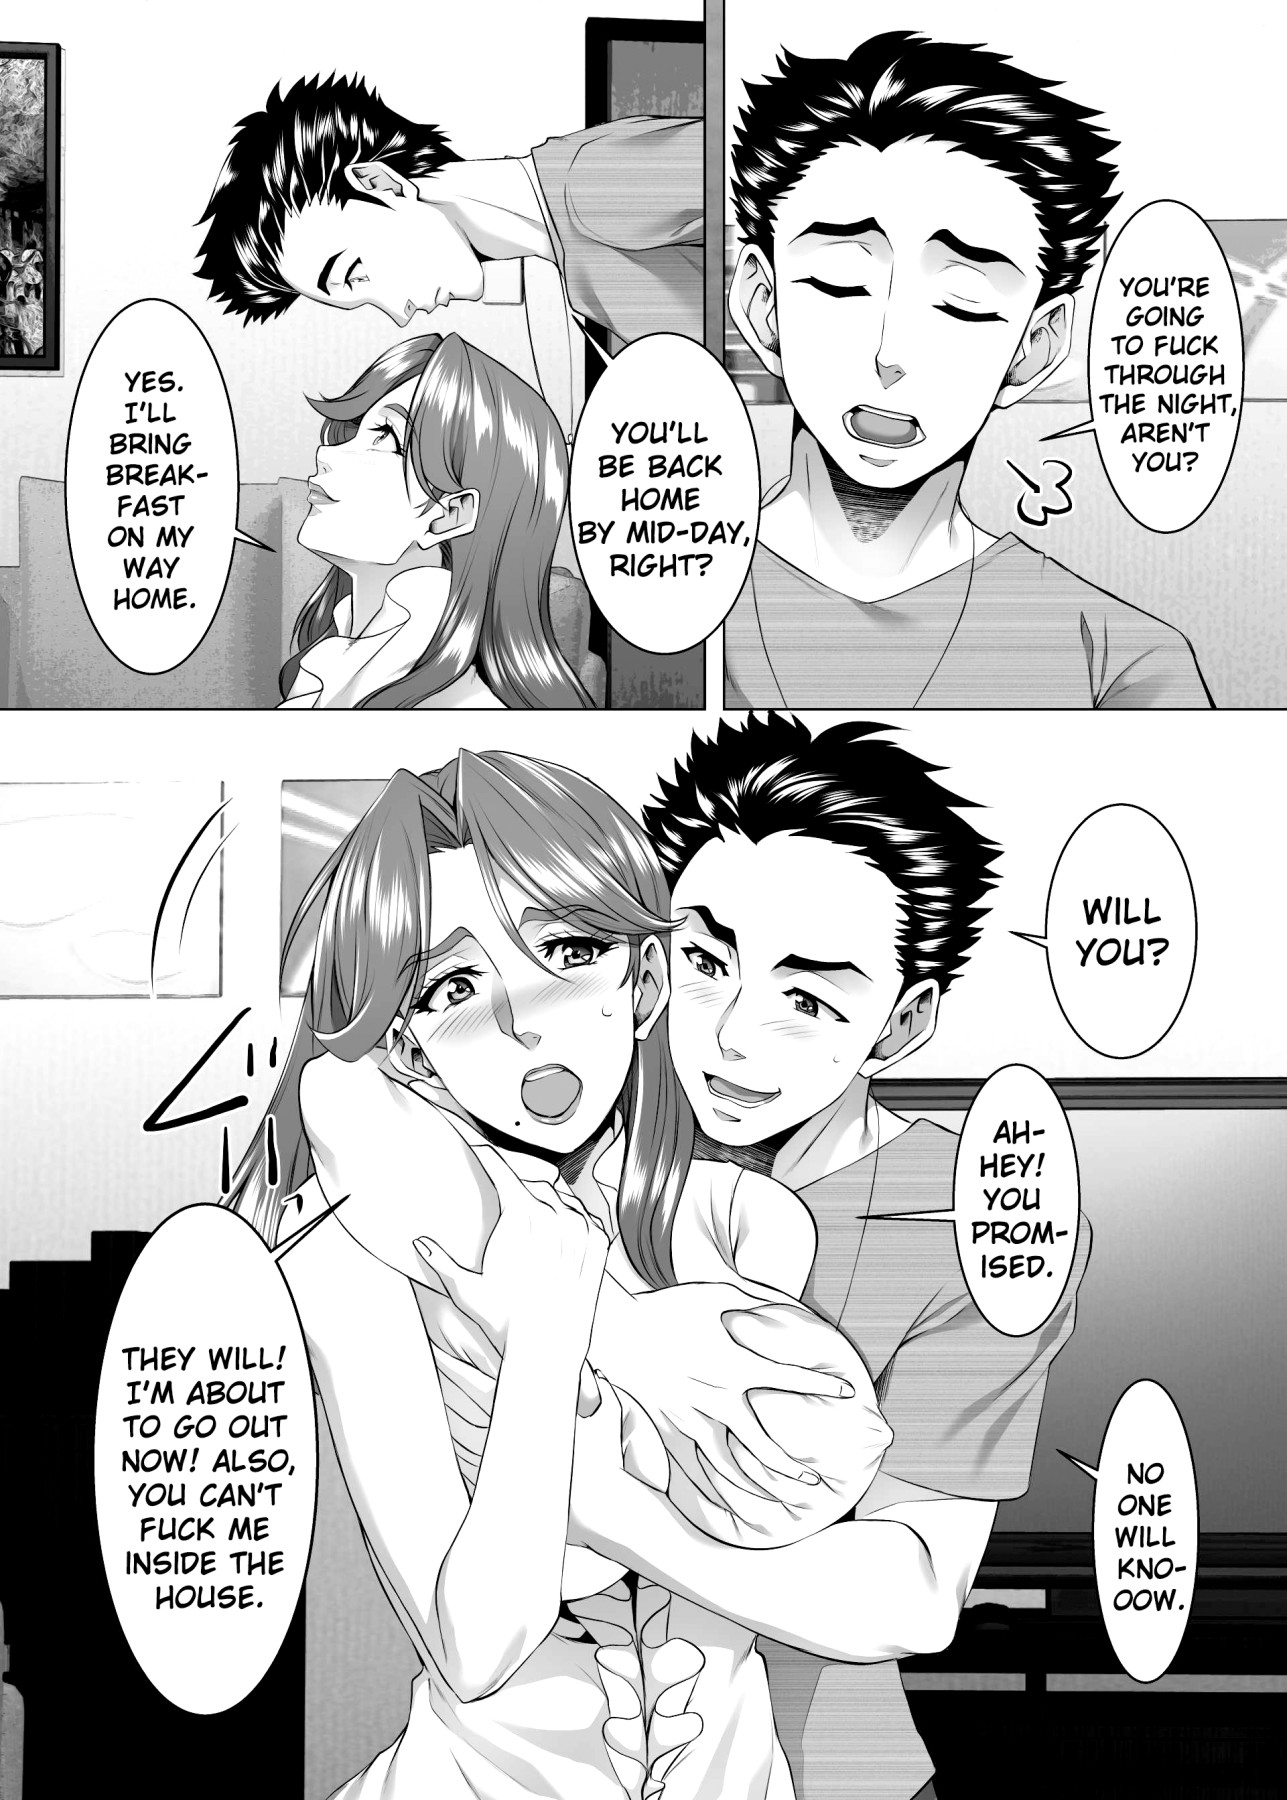 Hentai Manga Comic-Your Mom's A Pretty Good Woman, Huh?-Chapter 8-3